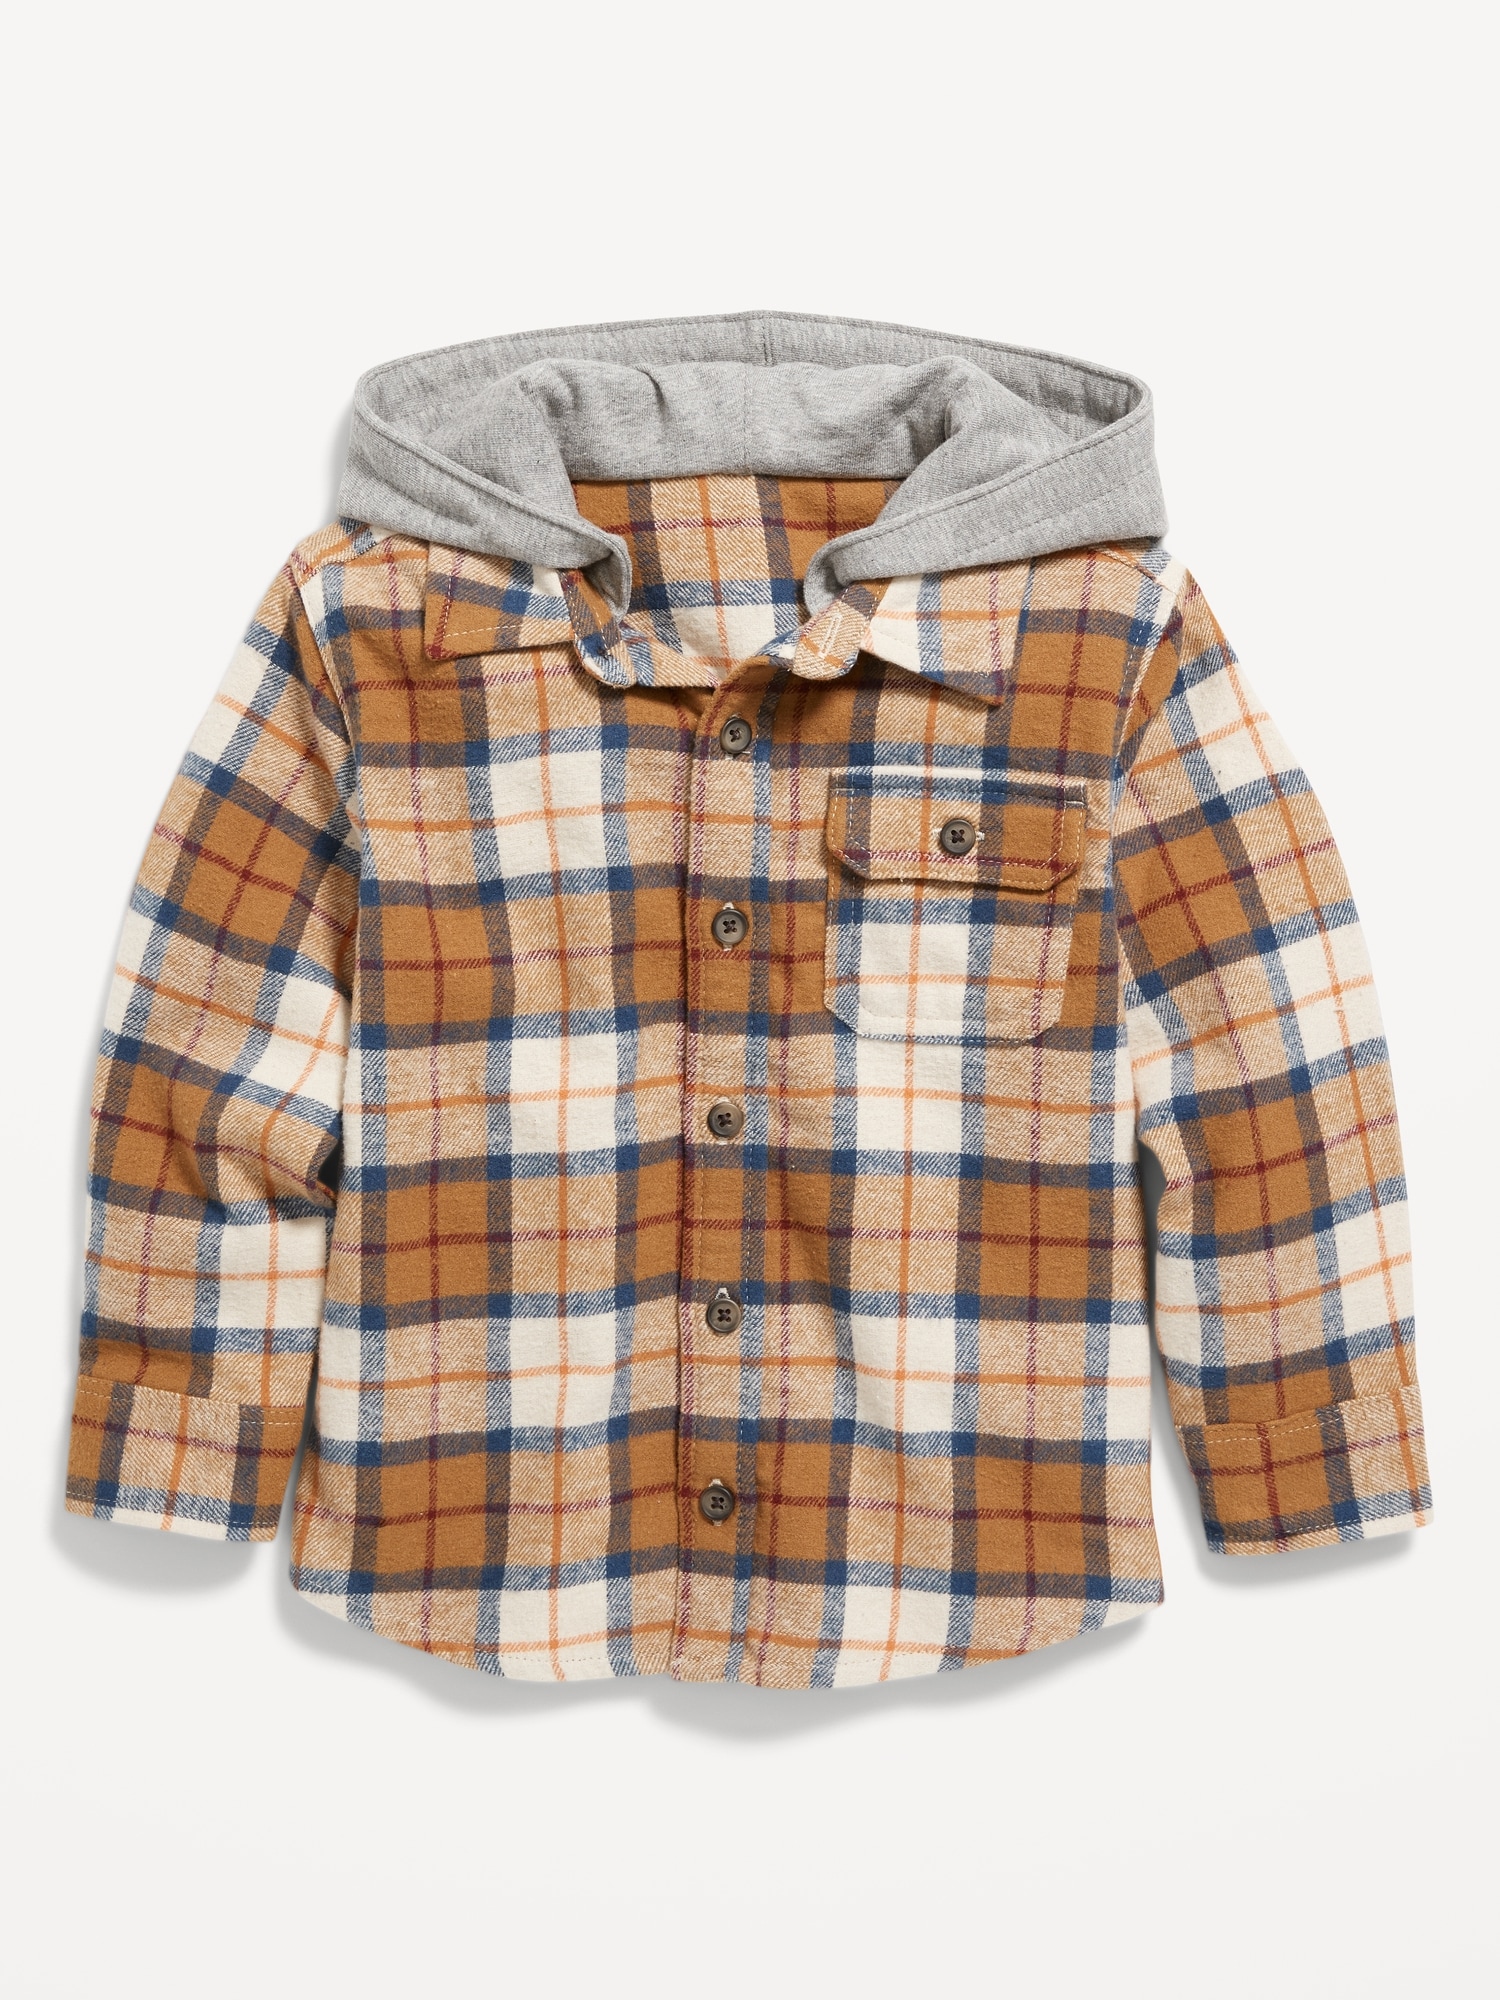 Hooded Soft-Brushed Flannel Shirt for Toddler Boys